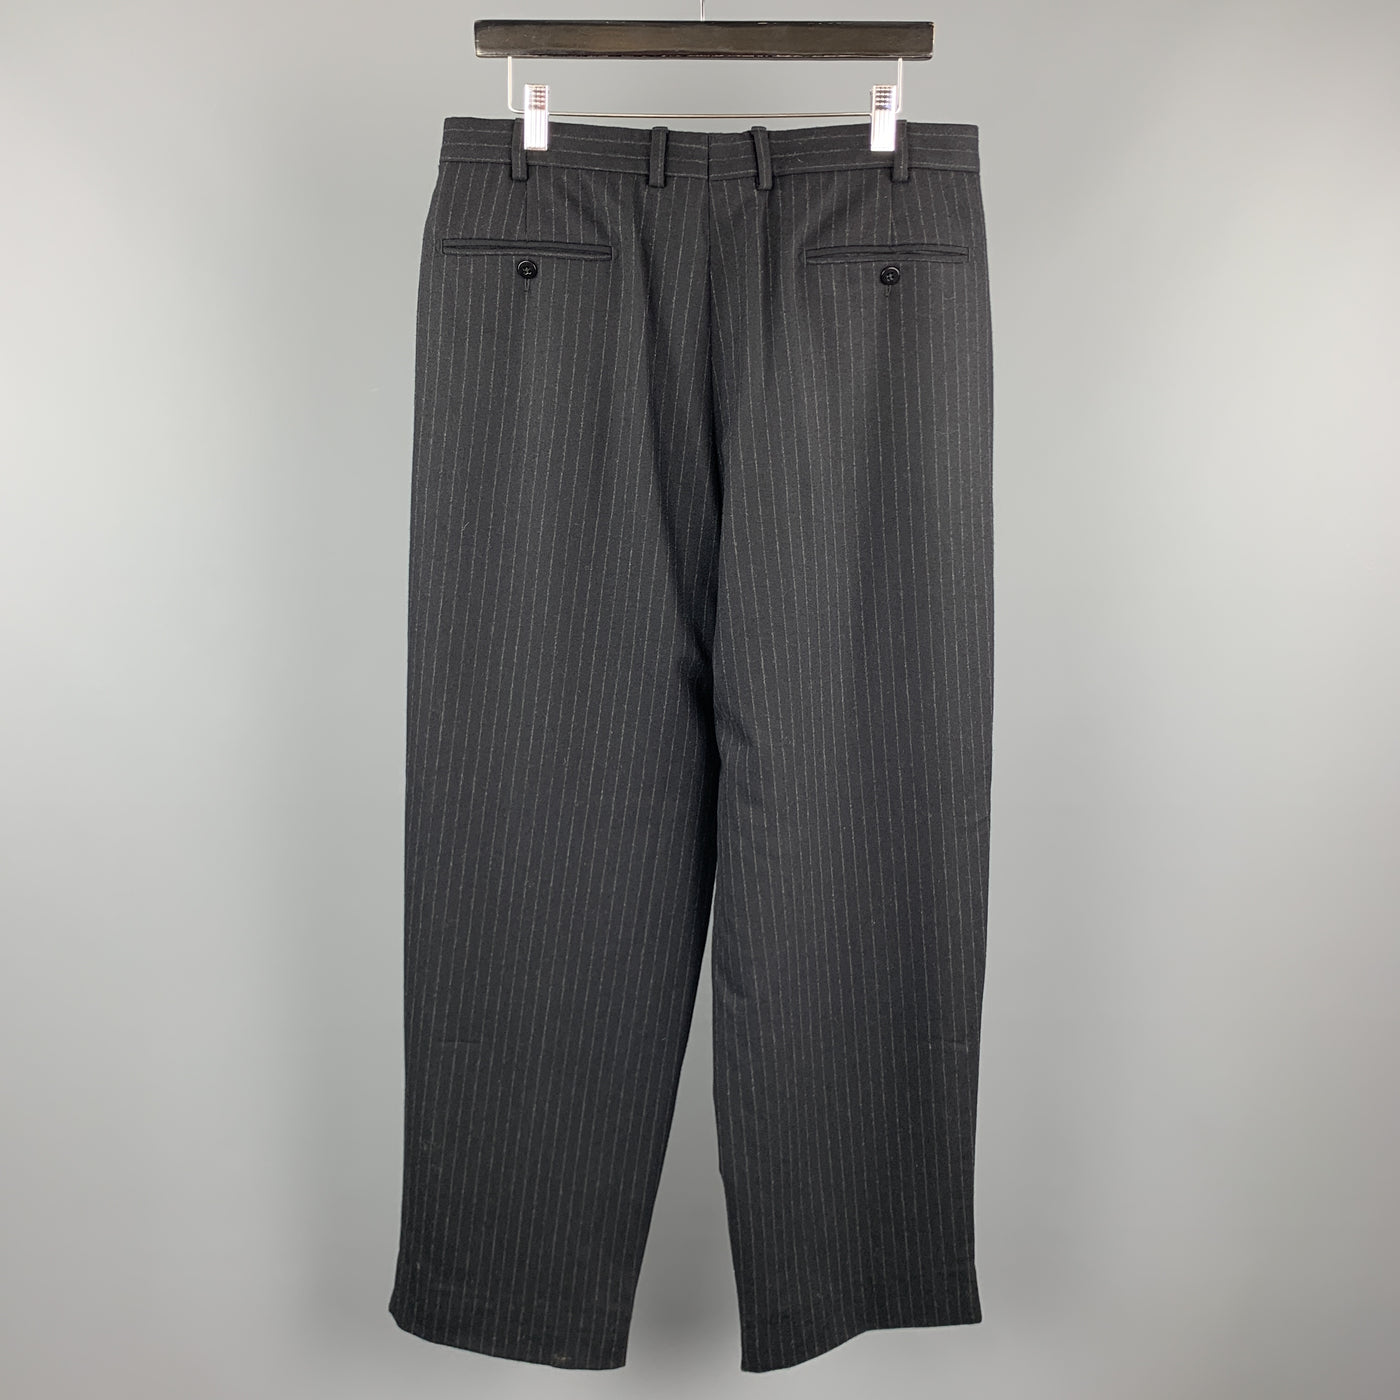 WILKES BASHFORD Size 34 Black & White Stripe Wool / Cashmere Pleated Dress Pants